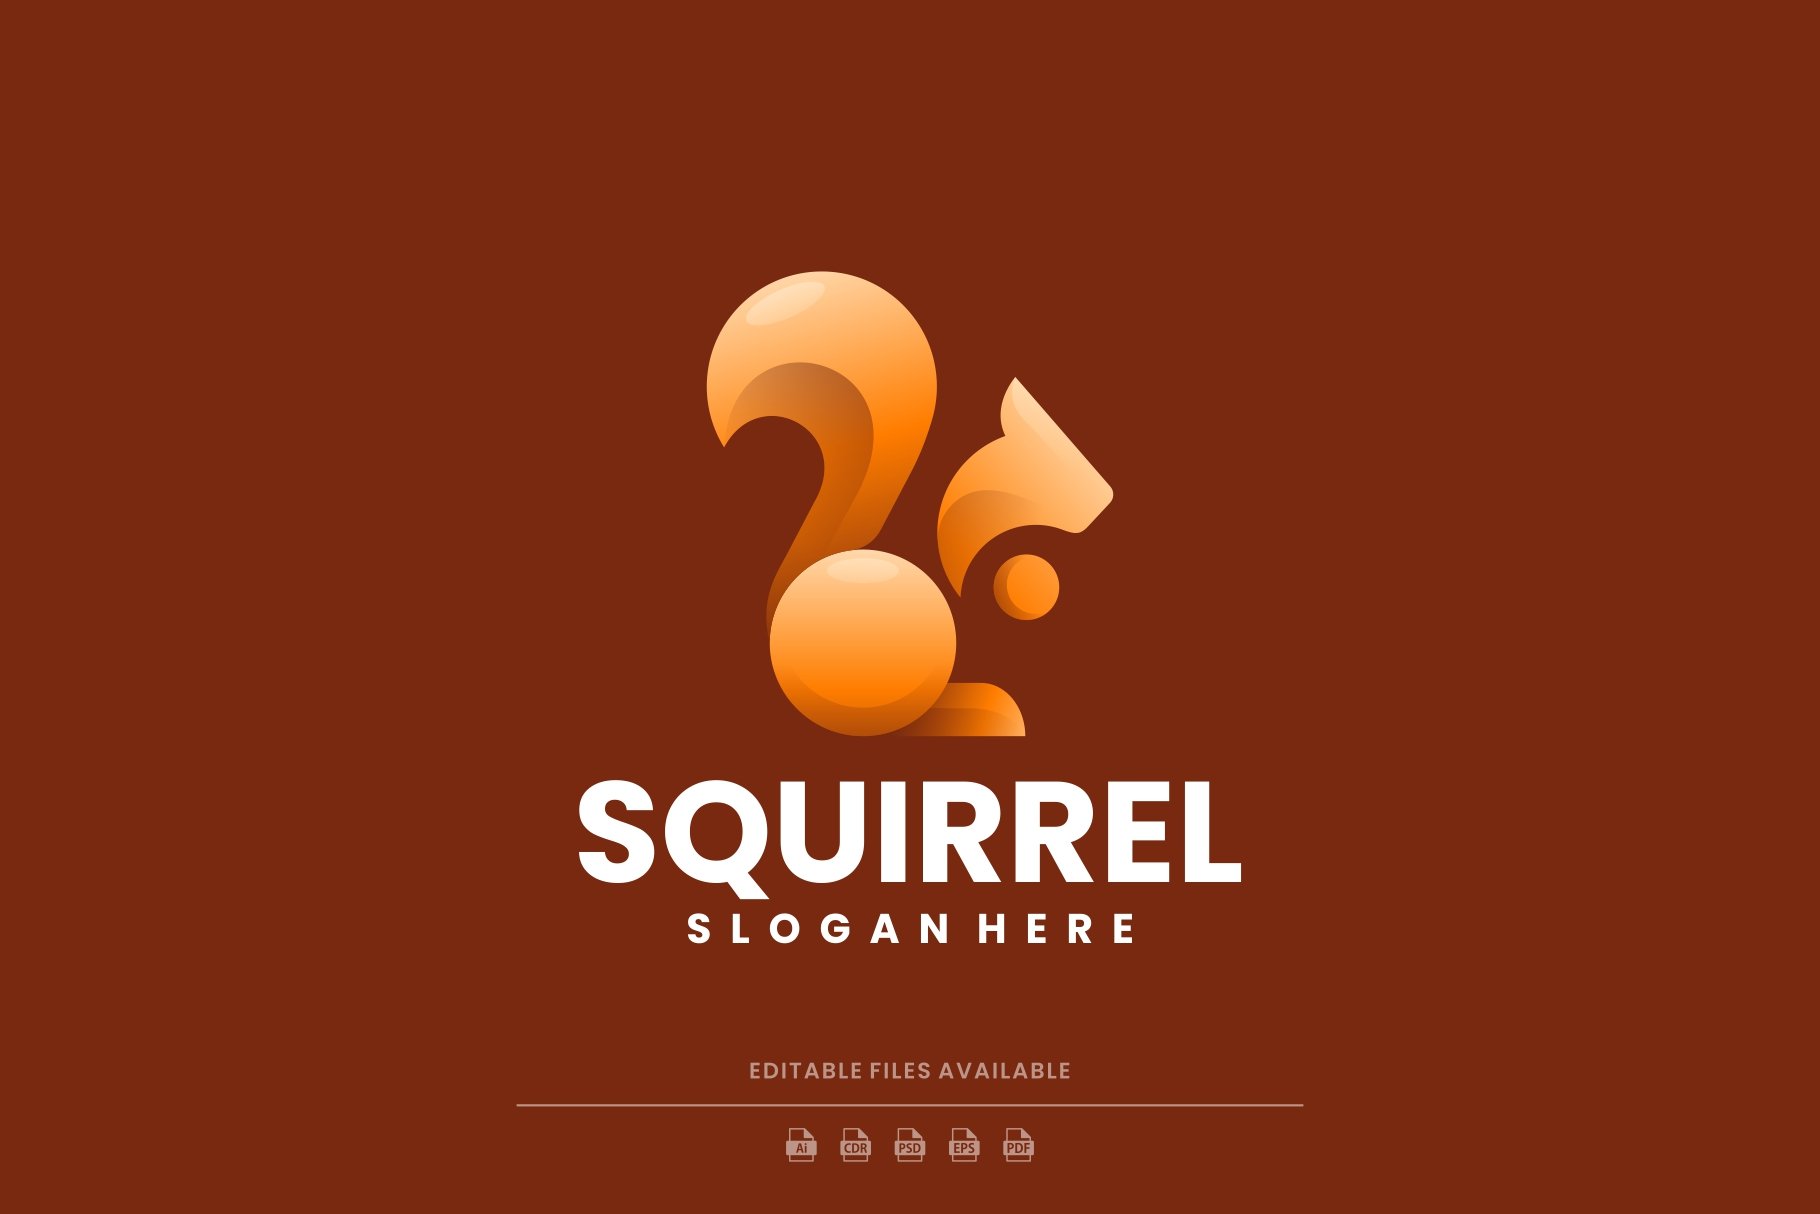 Squirrel Colorful Logo cover image.